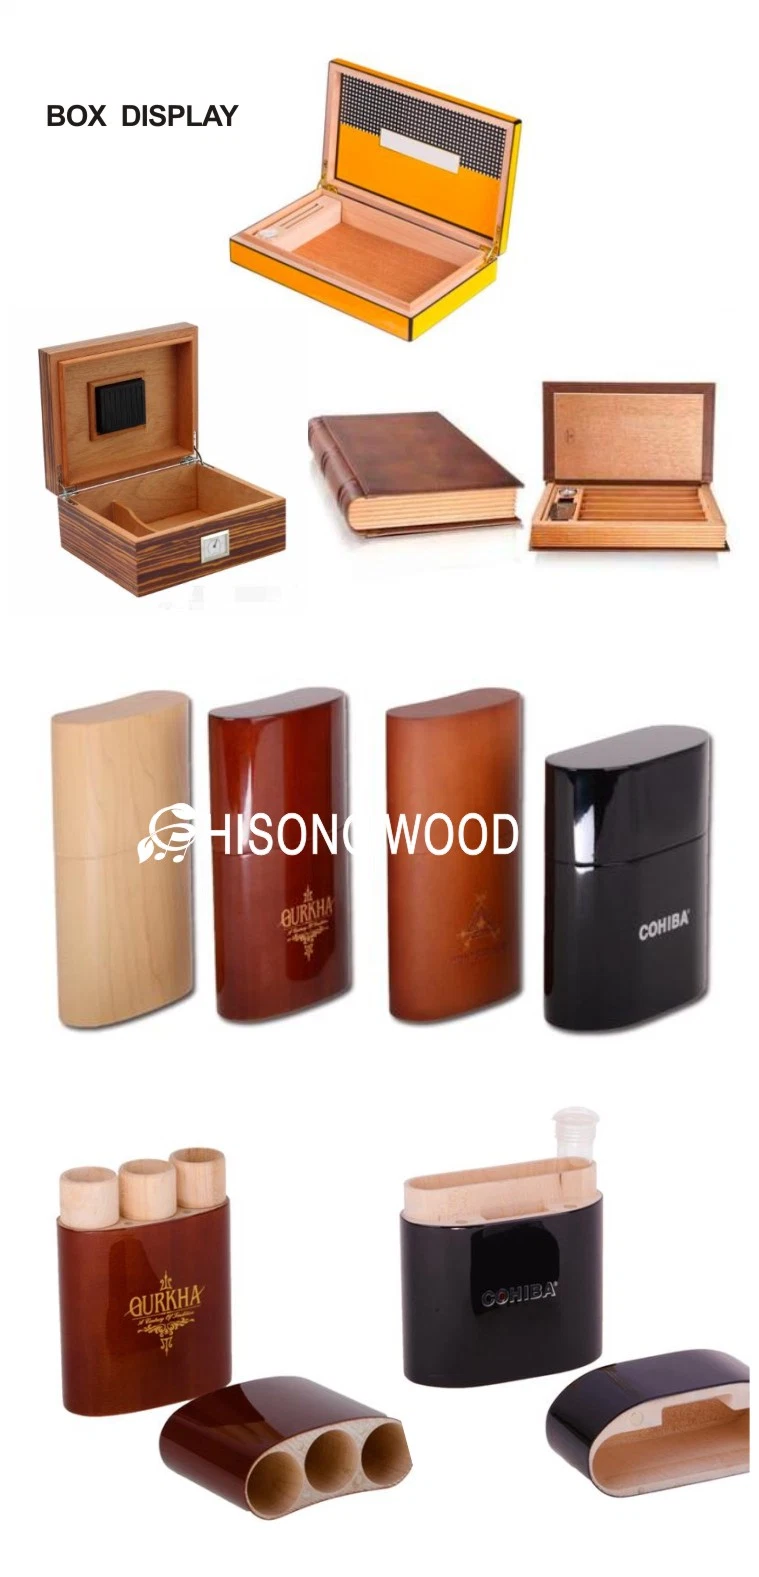 Handmade Cedar Wood Cigar Box Humidor with Hygrometer and Humidifier with Lock